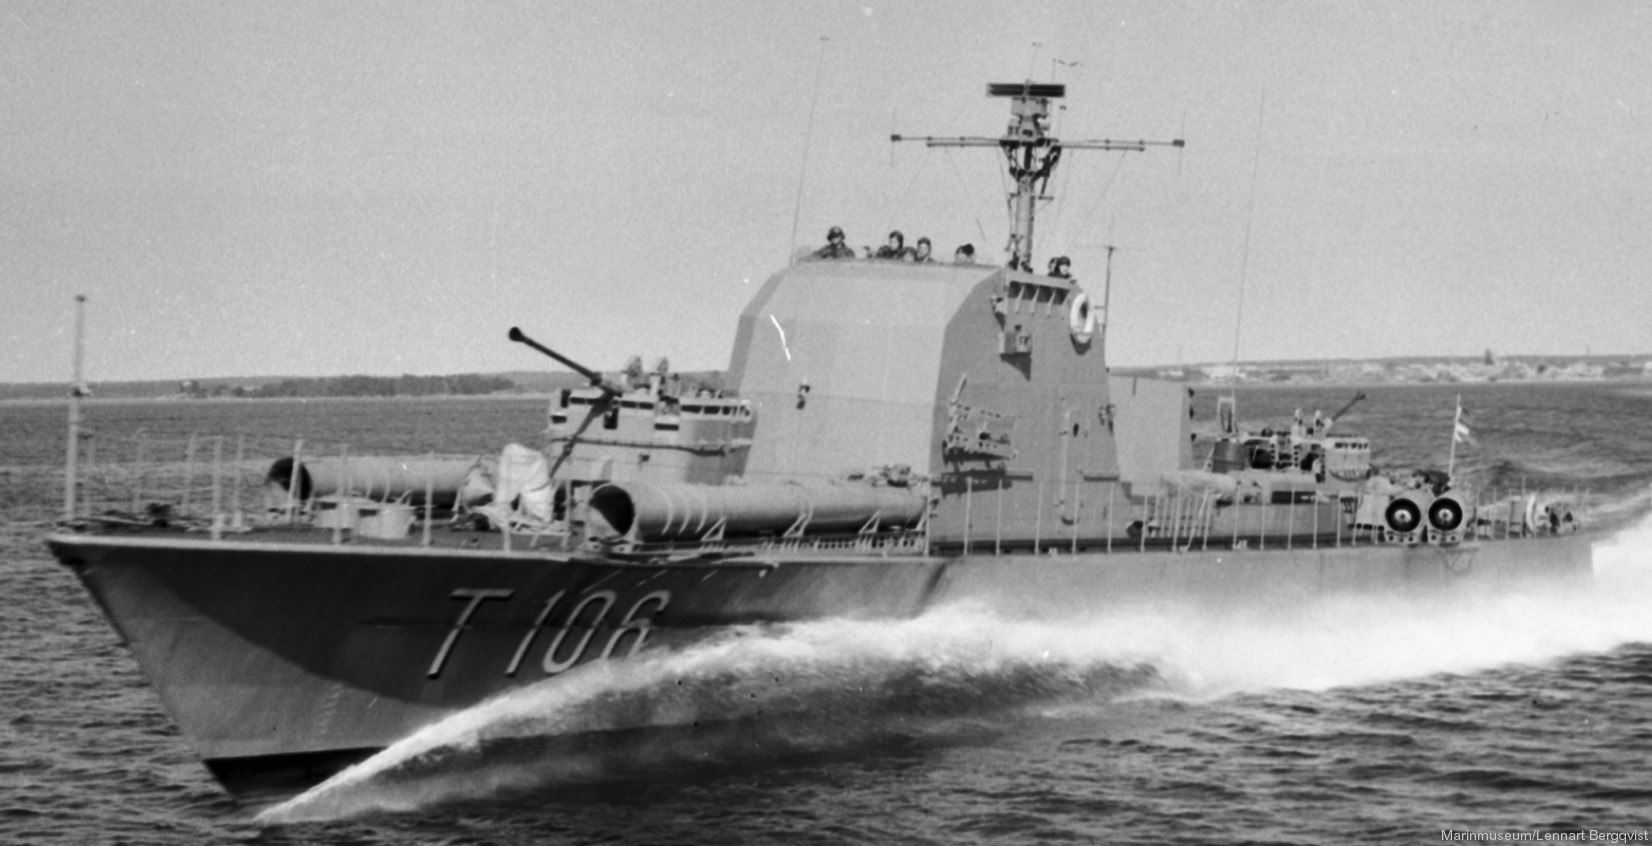 t106 rigel hms hswms plejad class fast attack craft torpedo boat vessel swedish navy svenska marinen 04